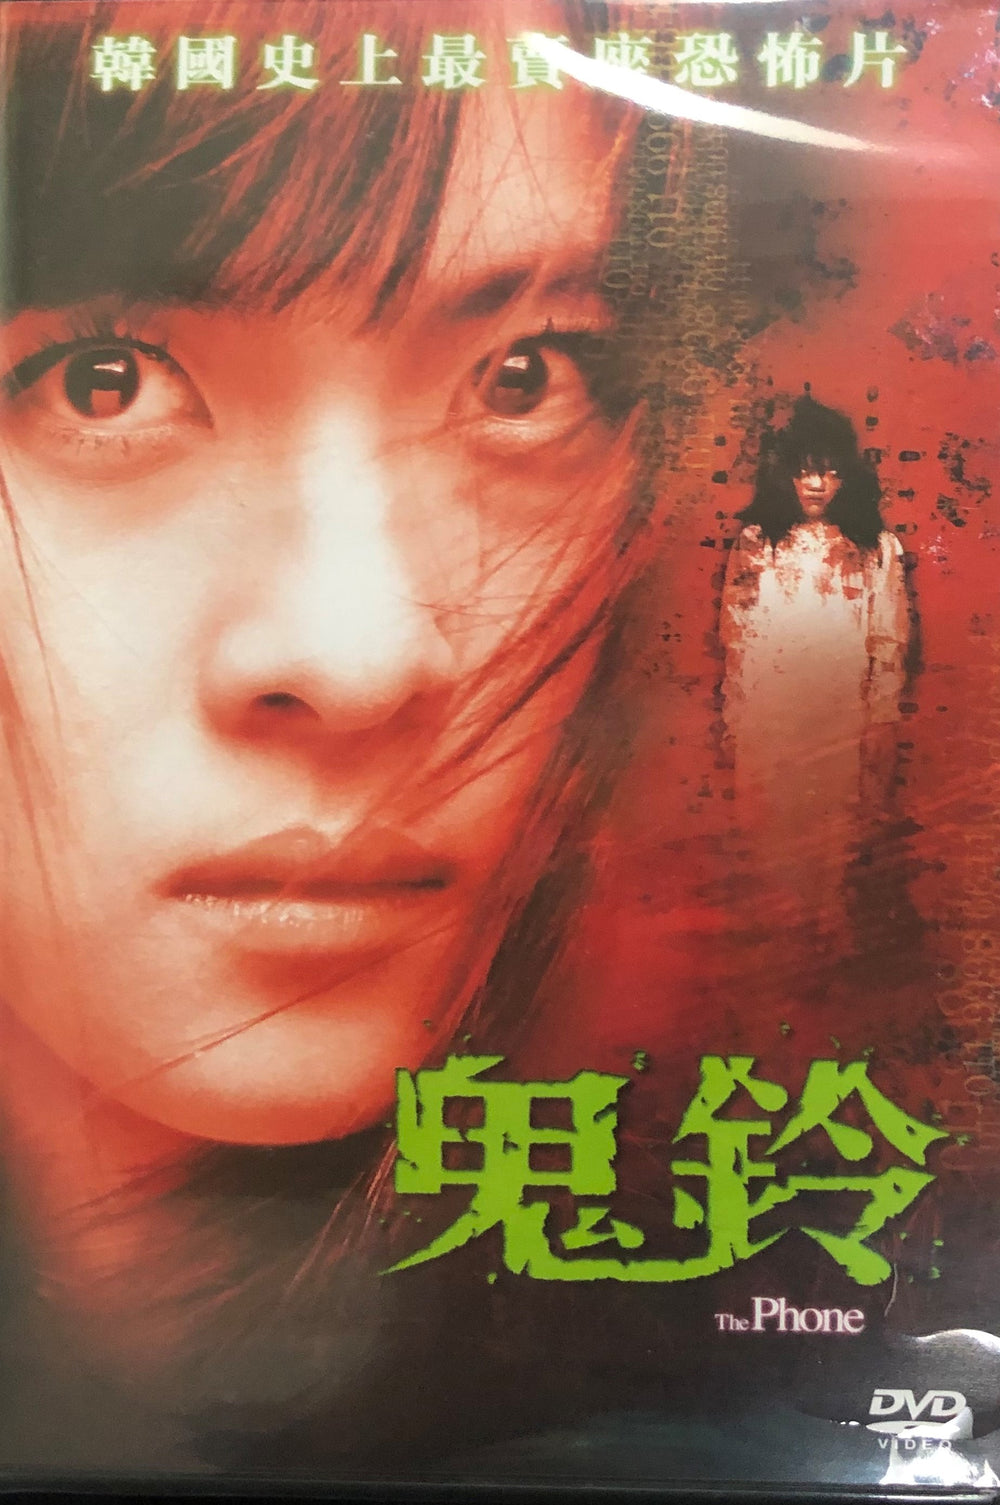 THE PHONE 2002 (Korean Movie) DVD ENGLISH SUBTITLES (REGION 3)